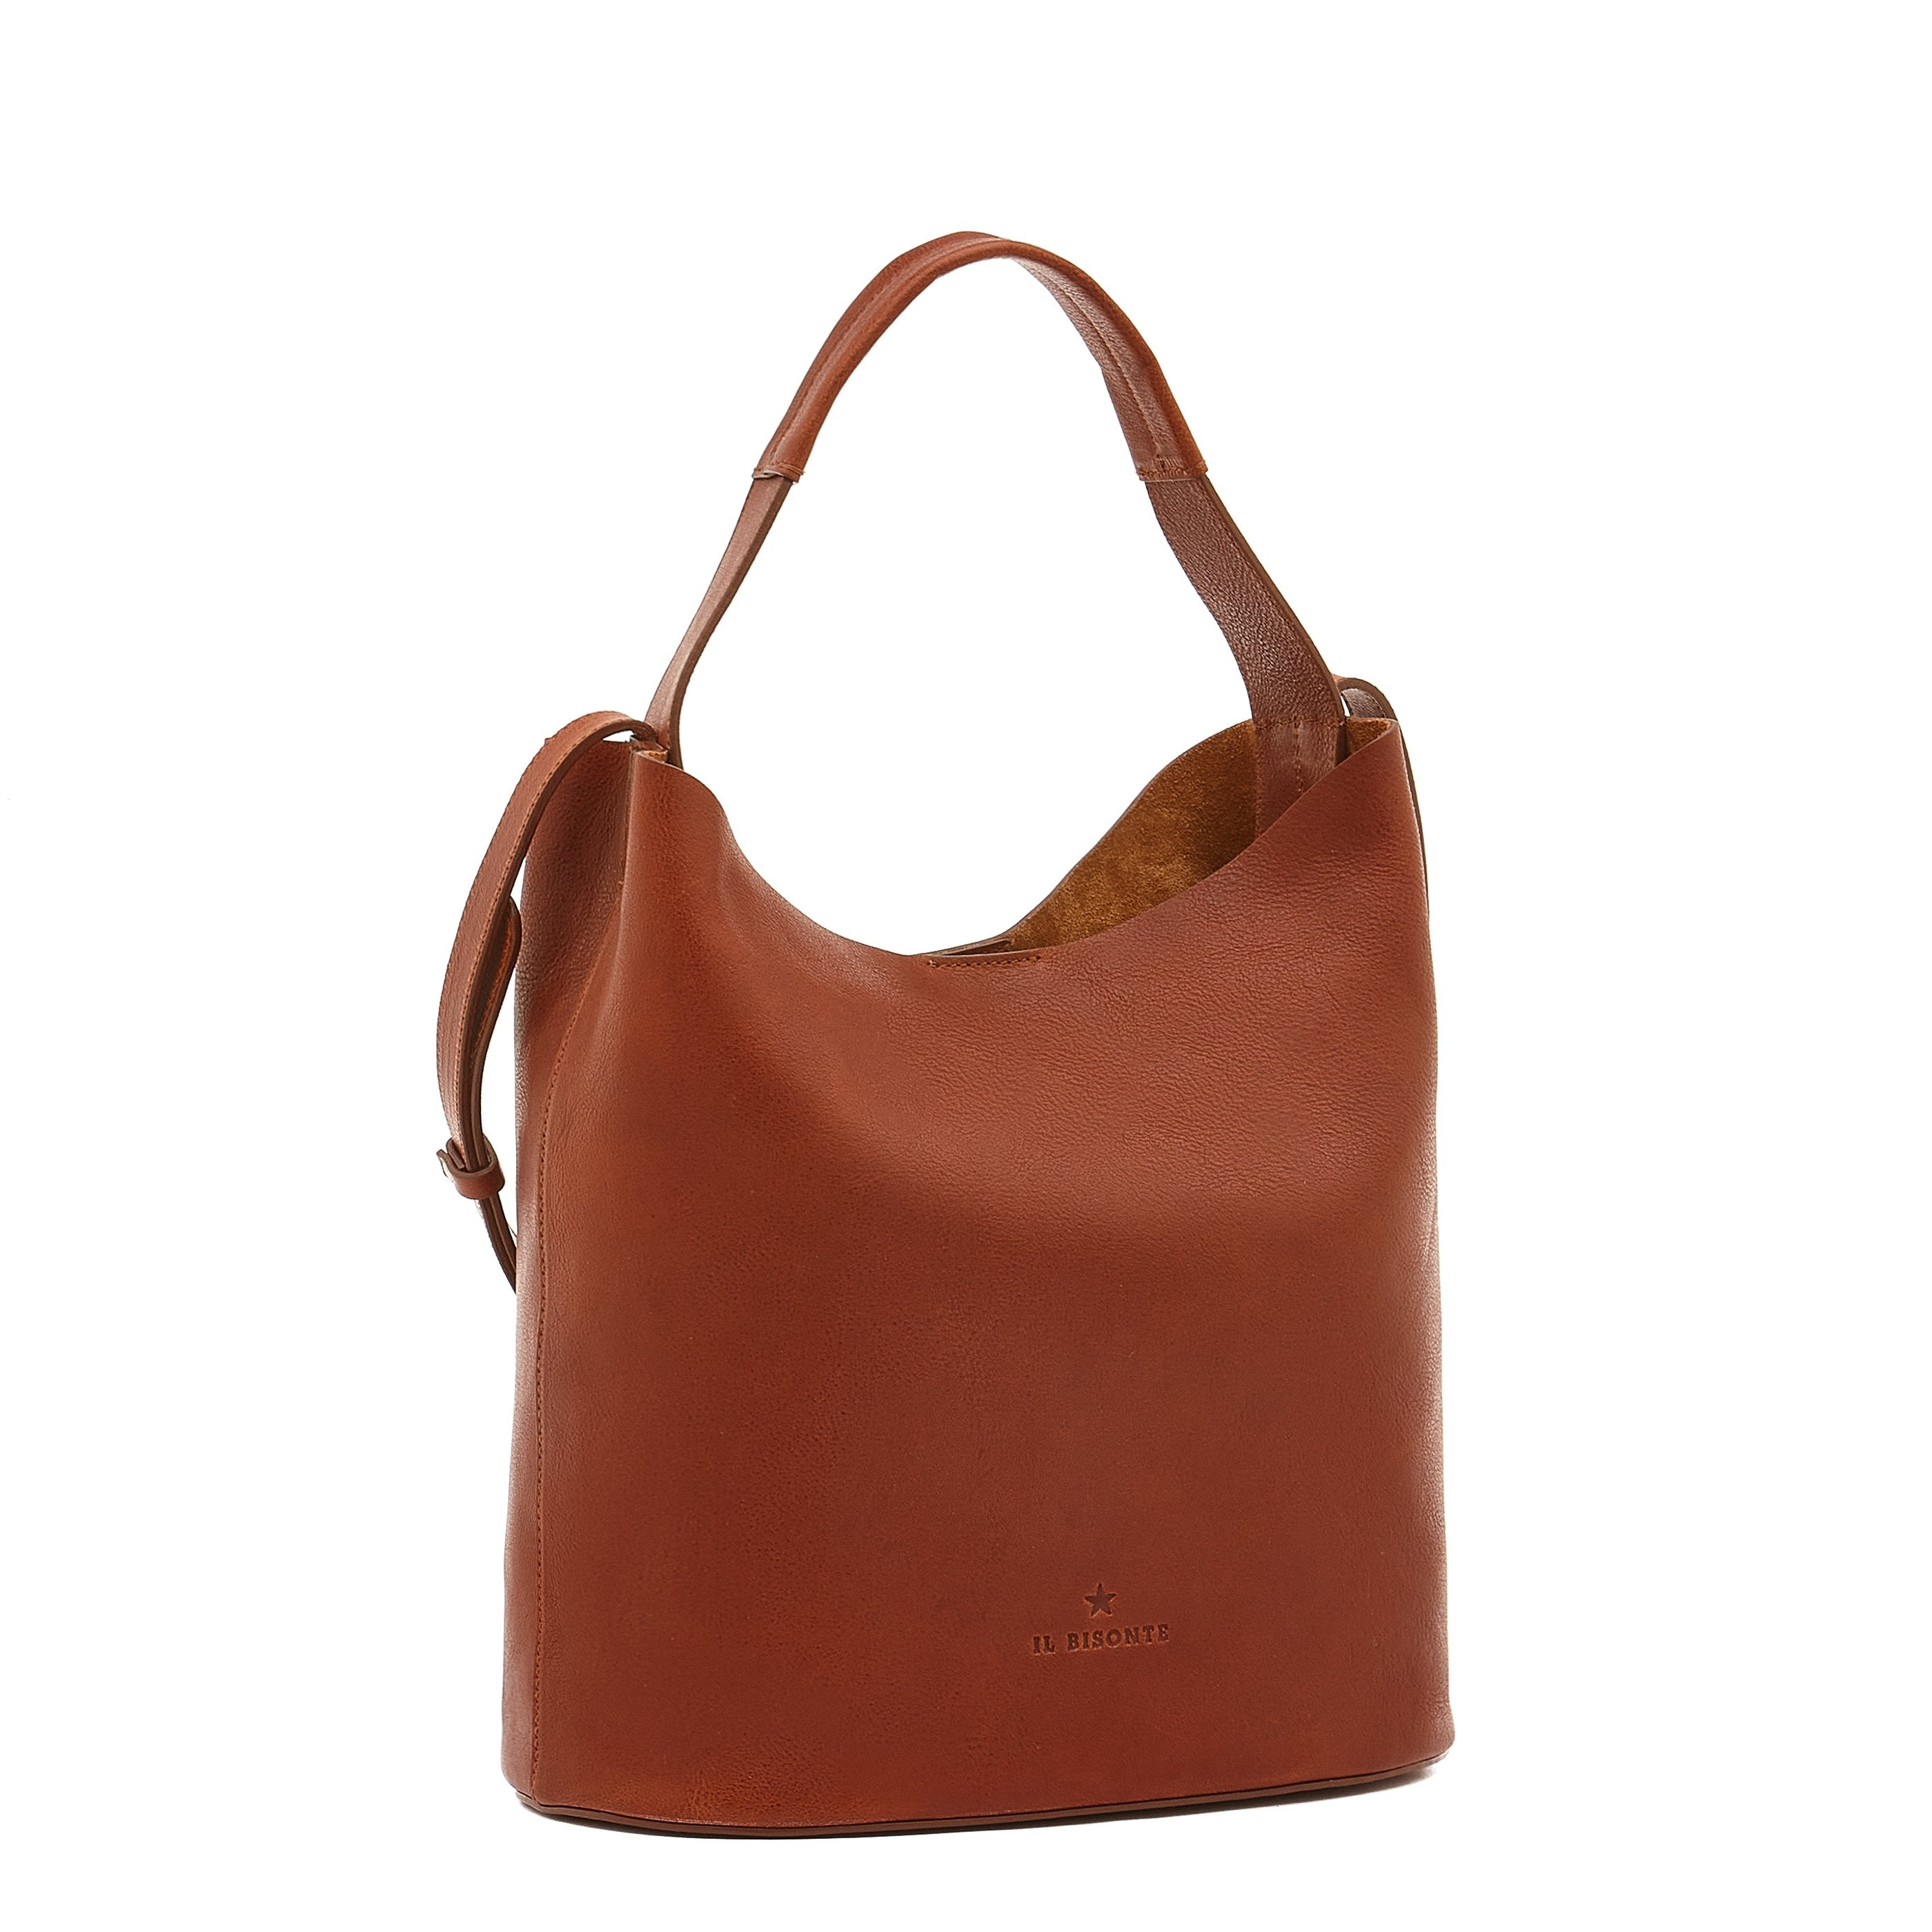 Le laudi | Women's bucket bag in vintage leather color sepia